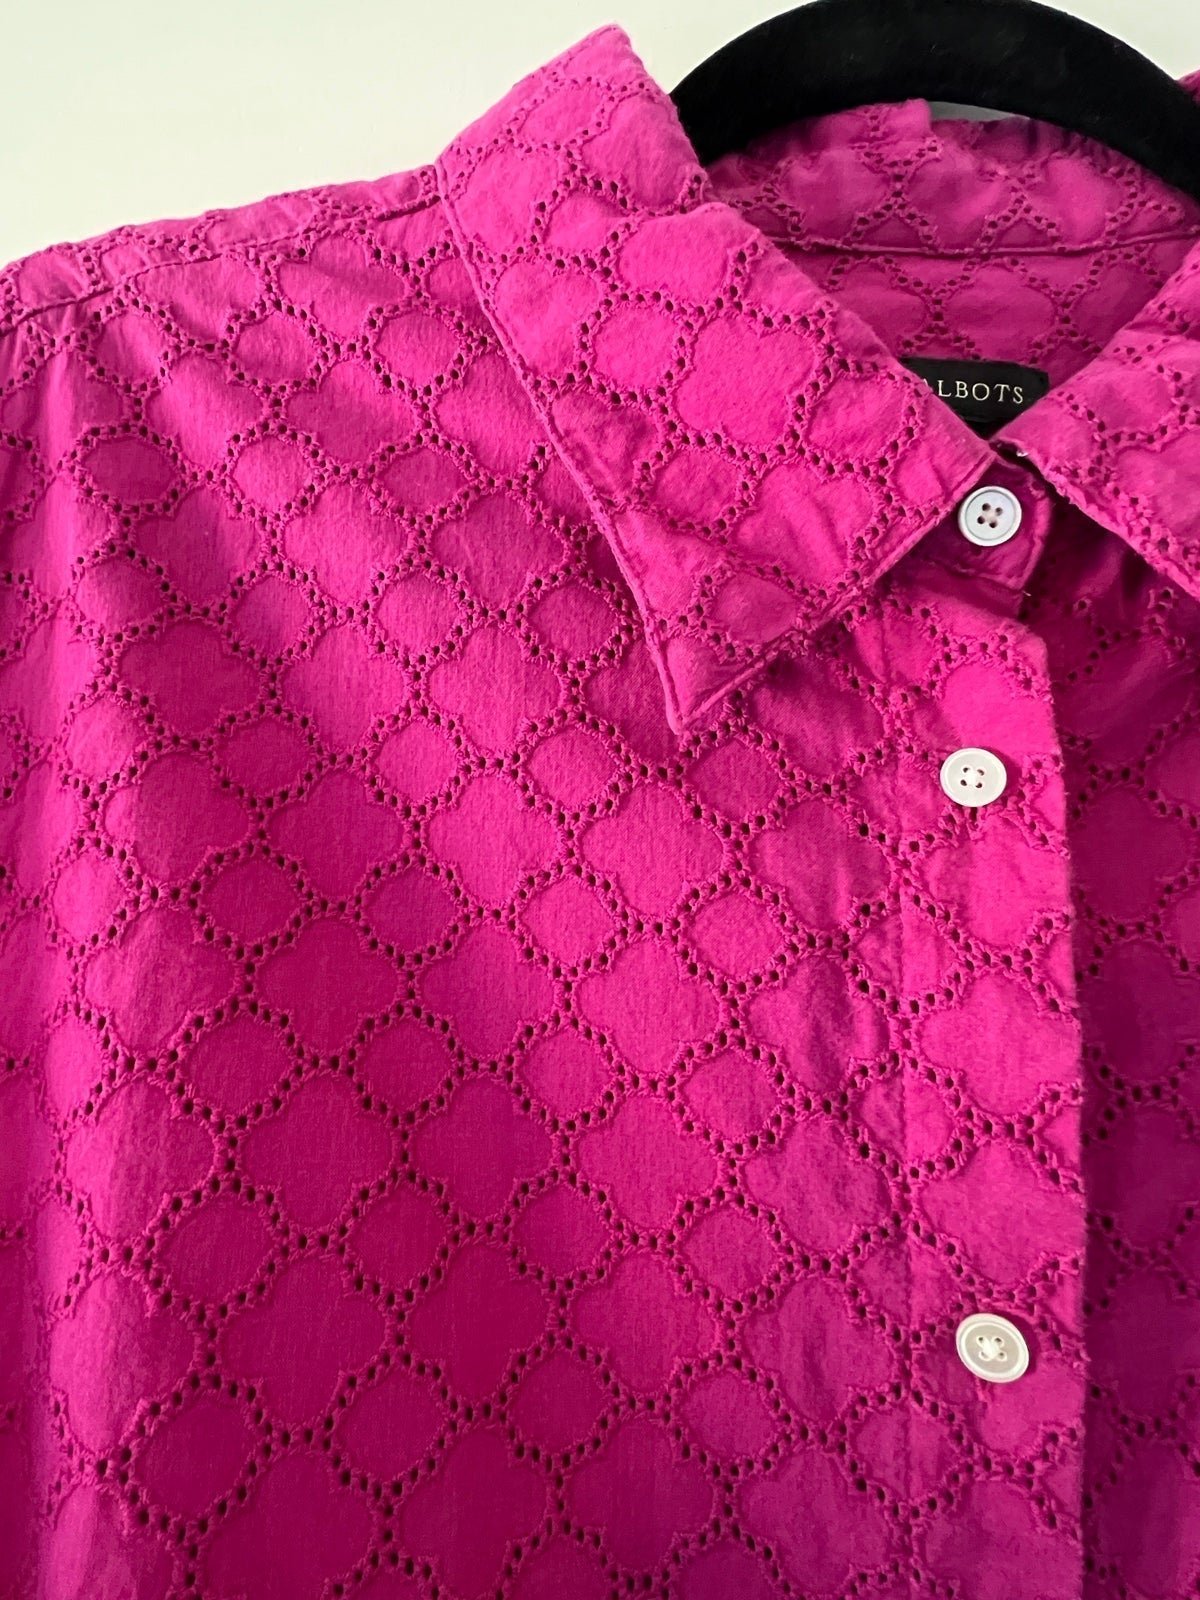 The Best Seller Talbots Hot Pink, 100% Cotton, Long Sleeve,  Button Down, Eyelet Shirt Size XL KizTqifzK Counter Genuine 